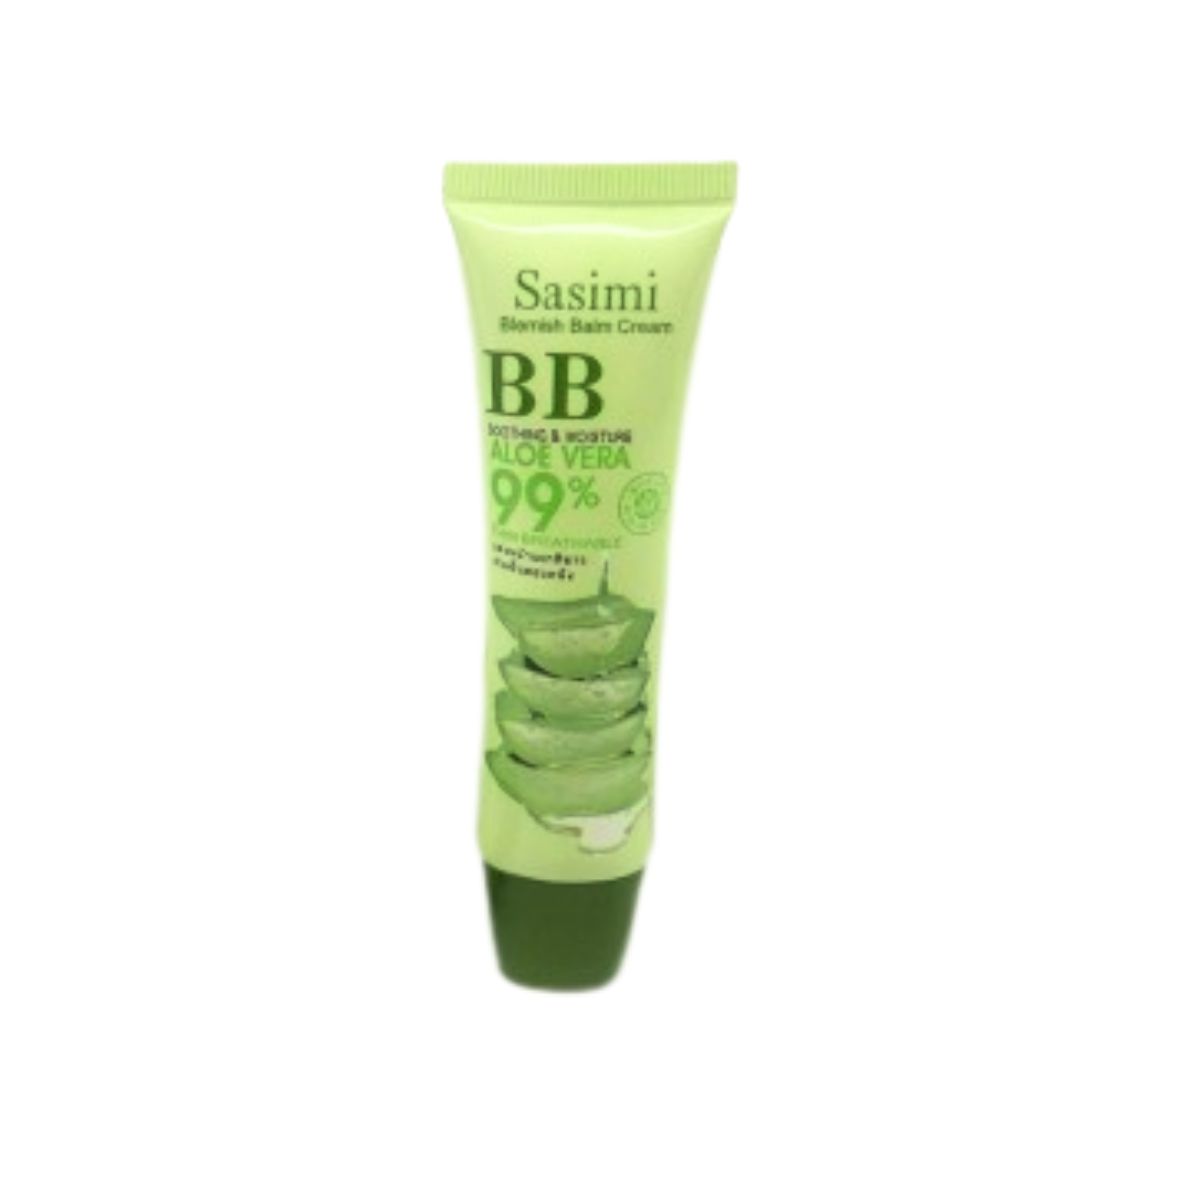 Sasimi Blemish Balm Cream - BB Soothing & Moisture - Aloe Vera - S738